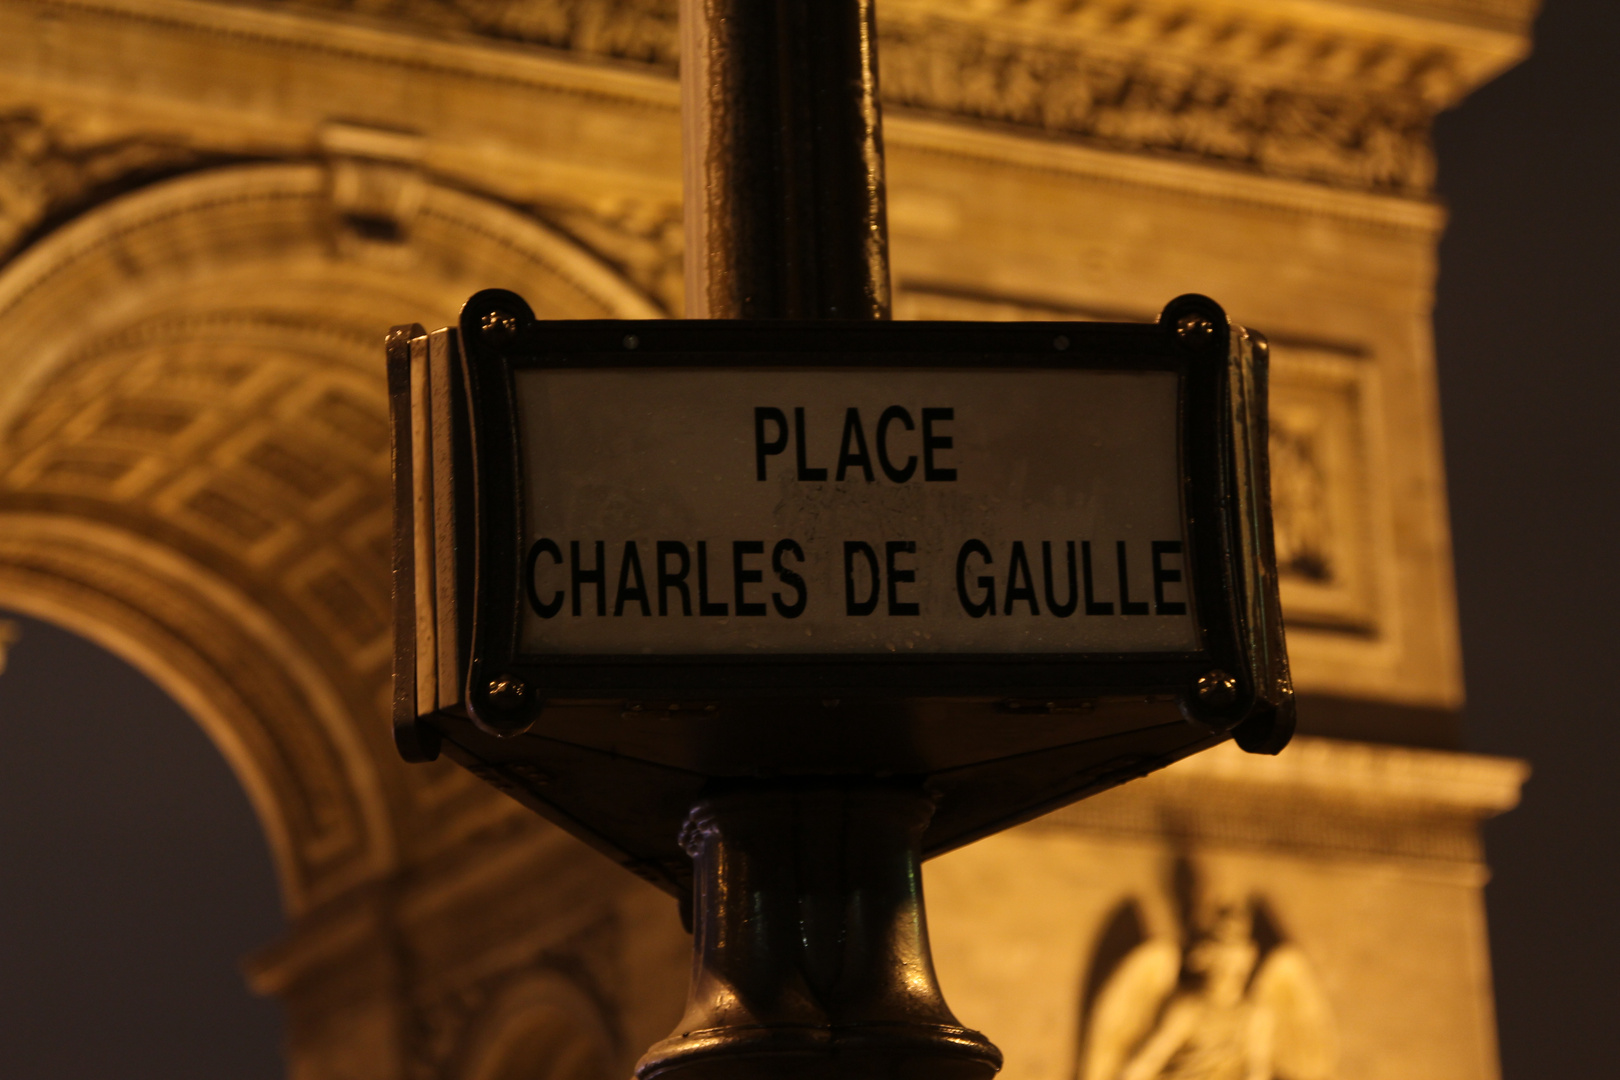 Place Charles de Gaulle, December 2011